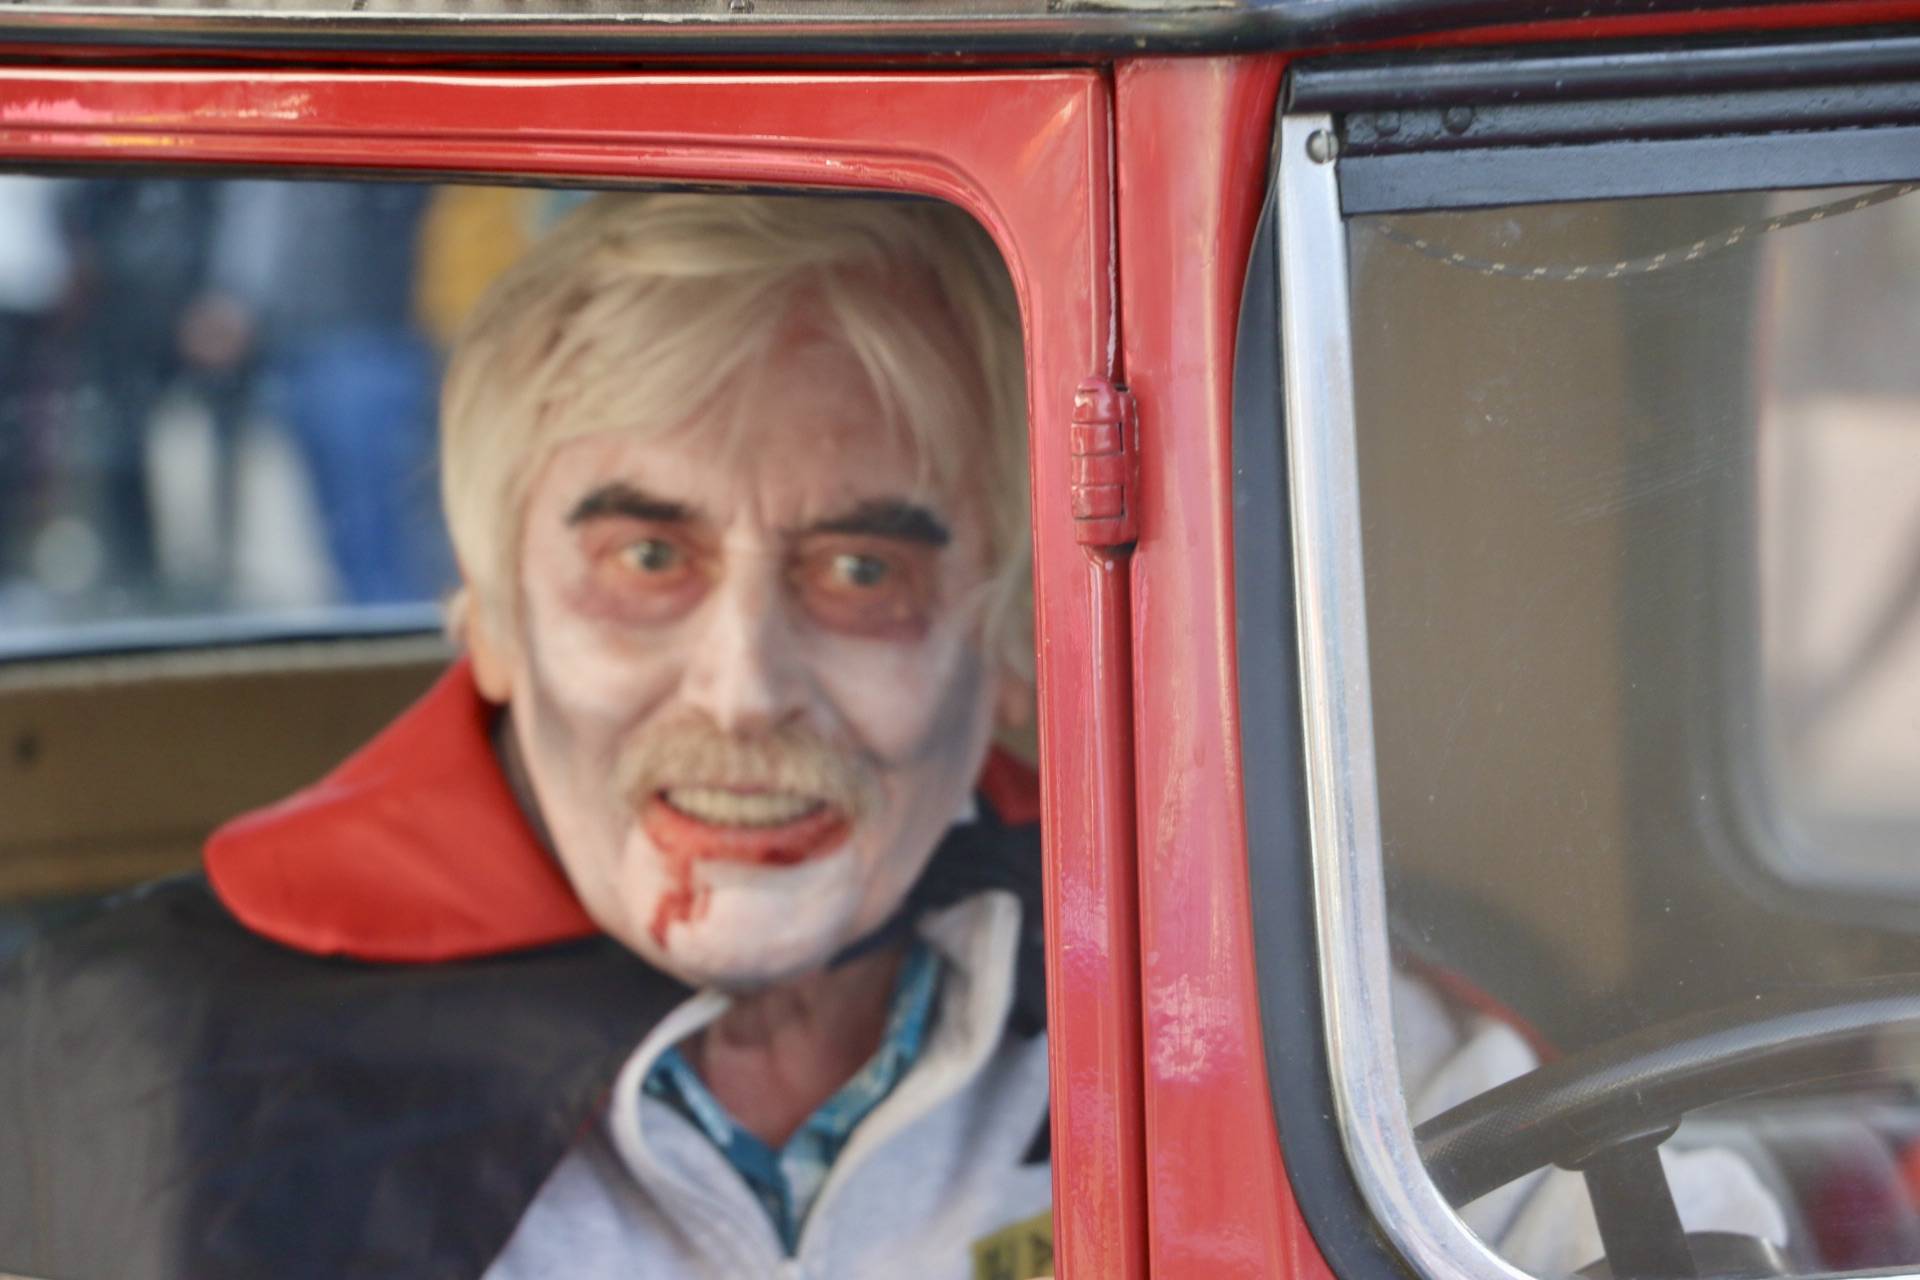 Who knew Dracula drove a little red car? Ken Park/North Kitsap Herald photographs